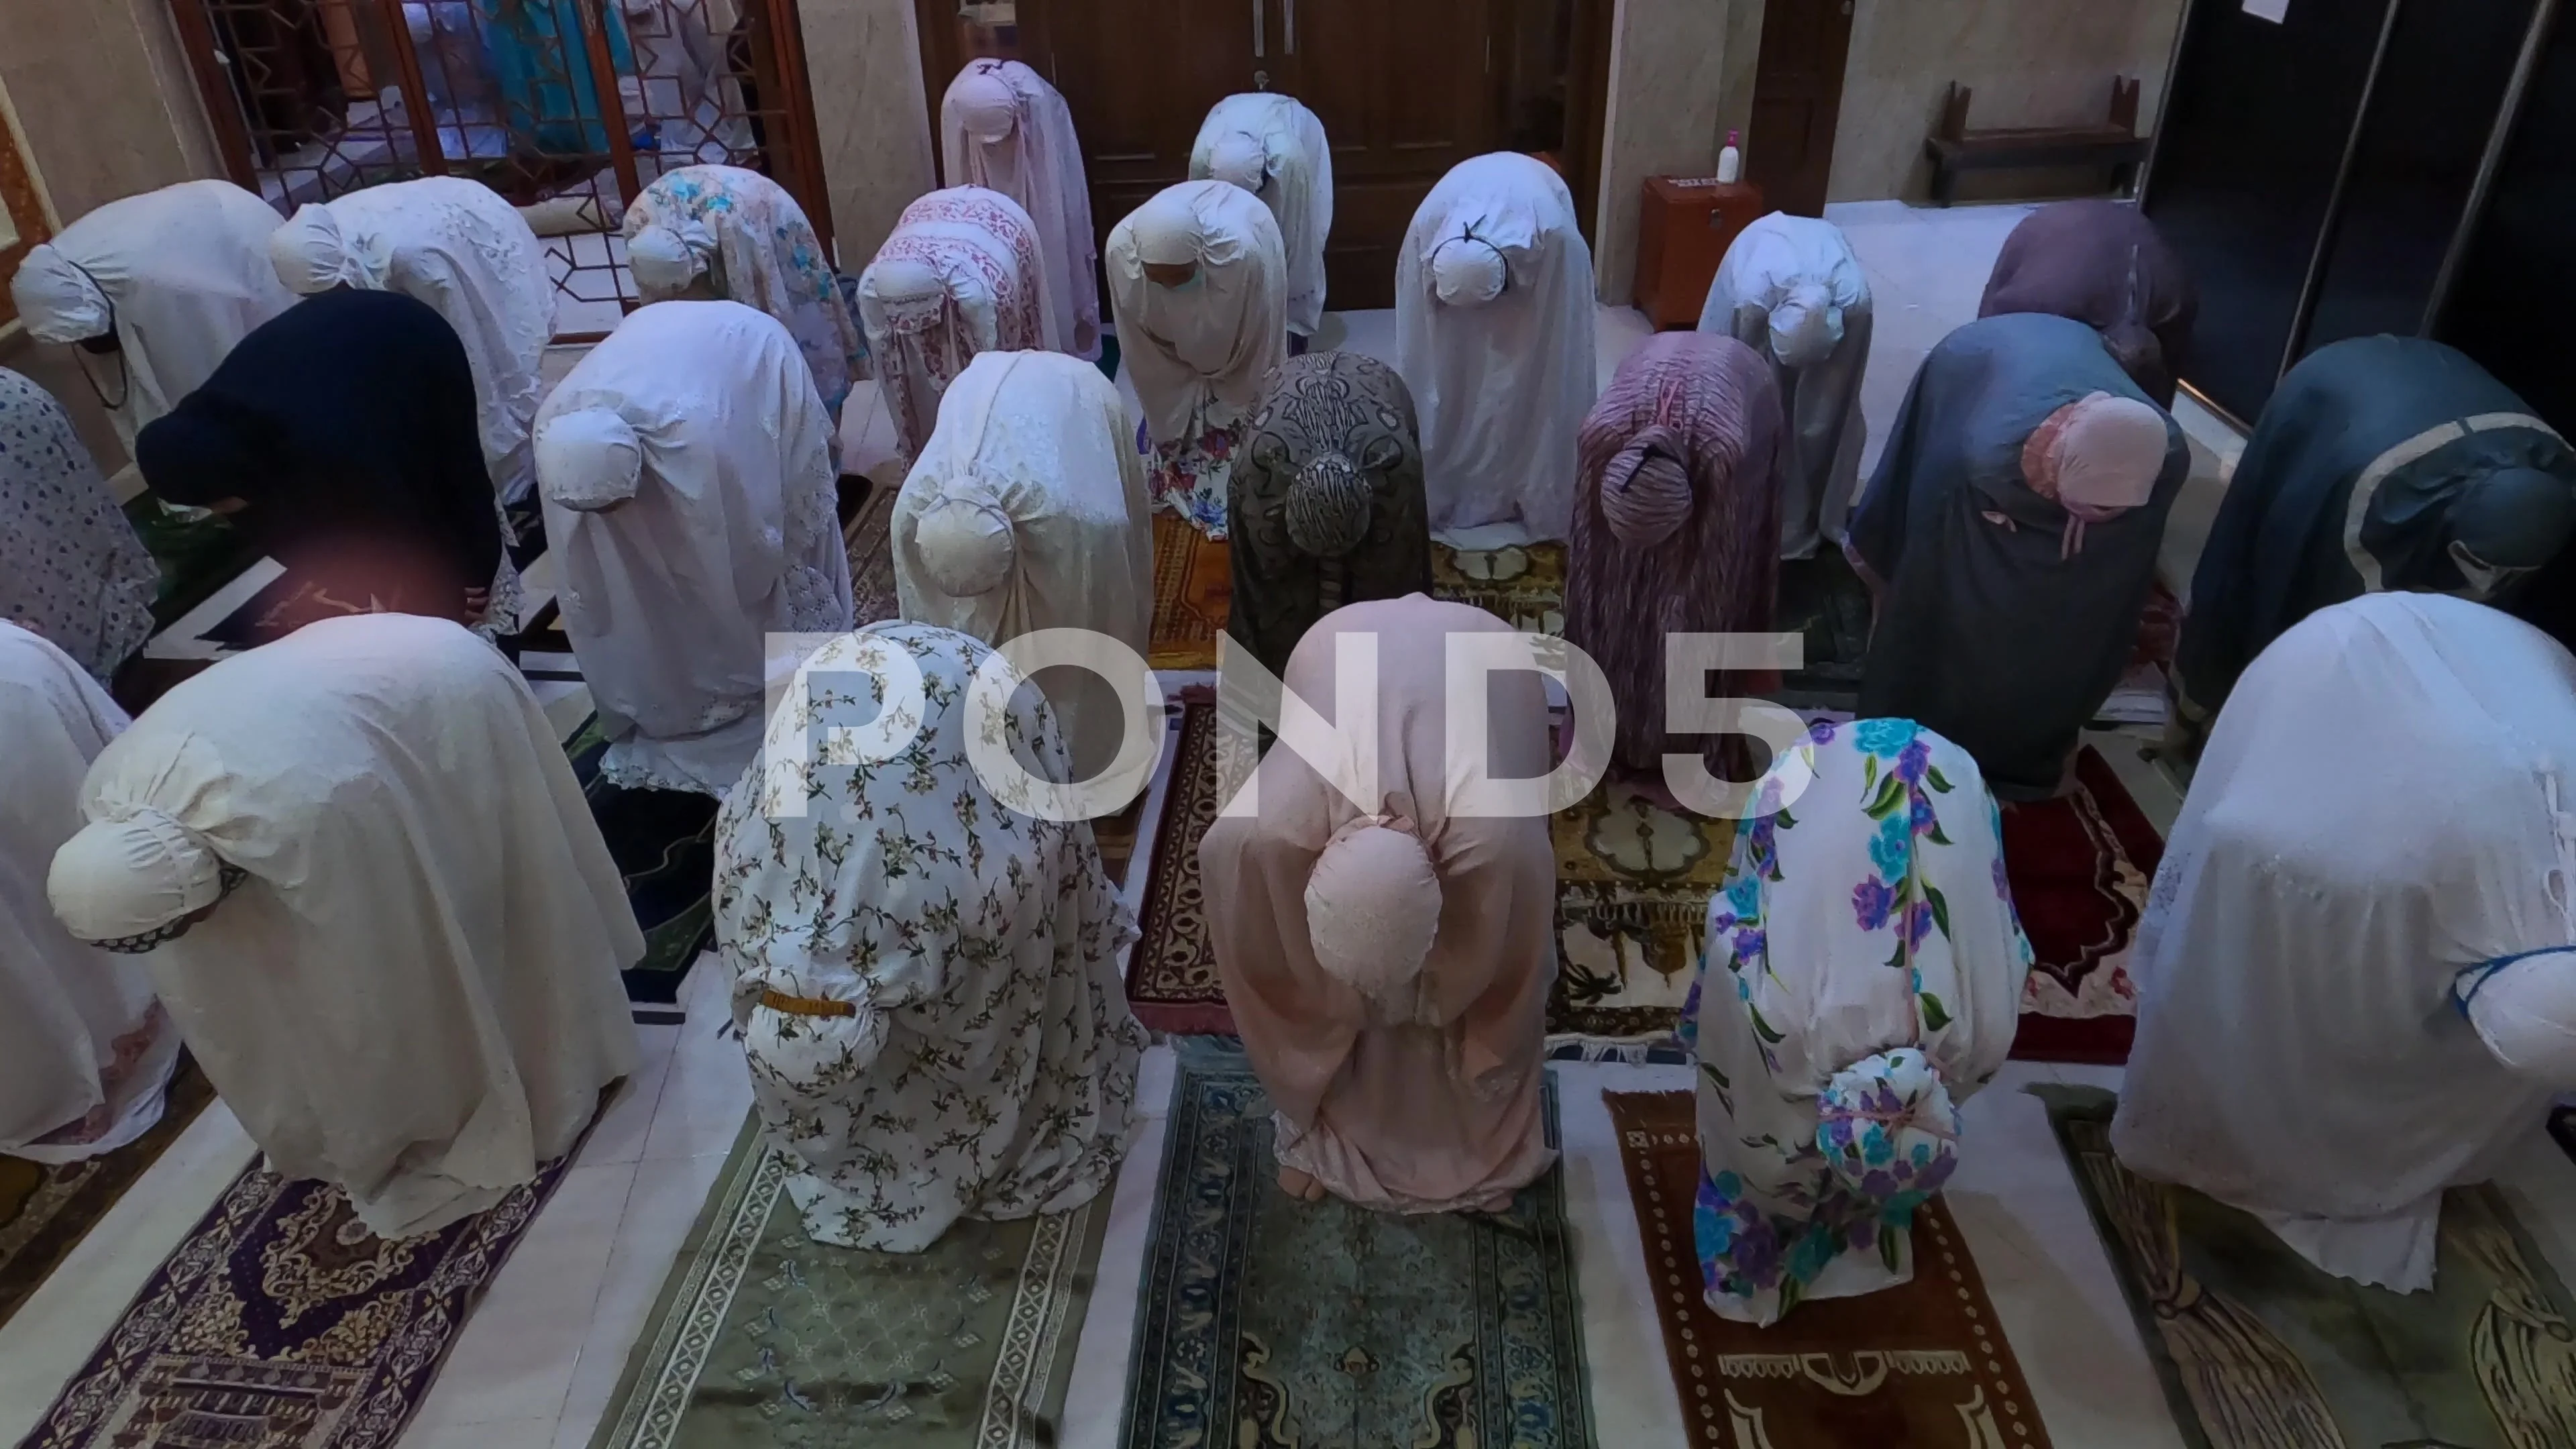 islamic women prayer images